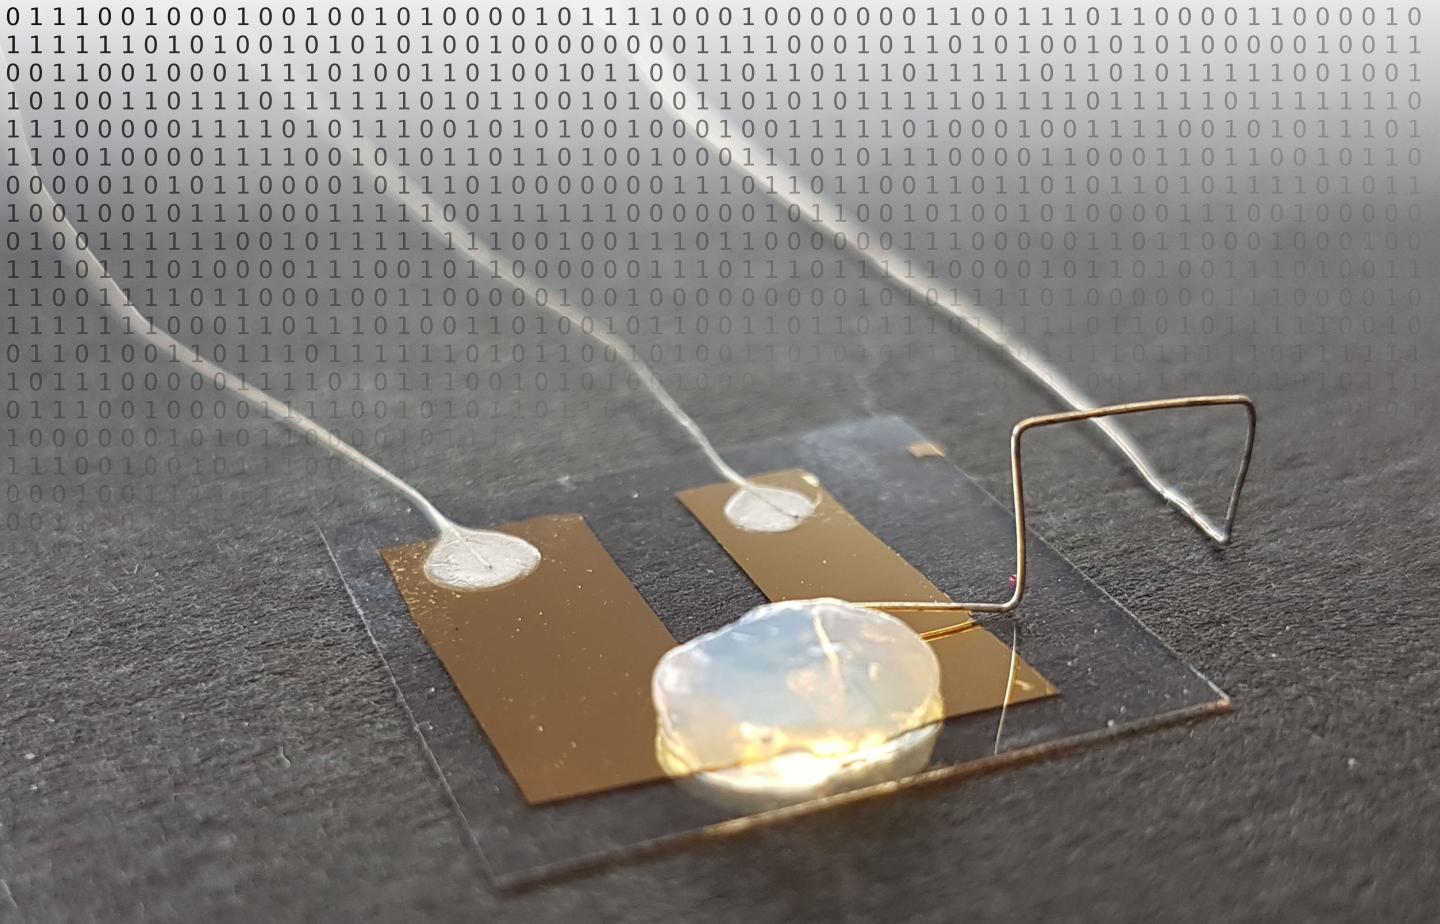 Single-Atom Transistor